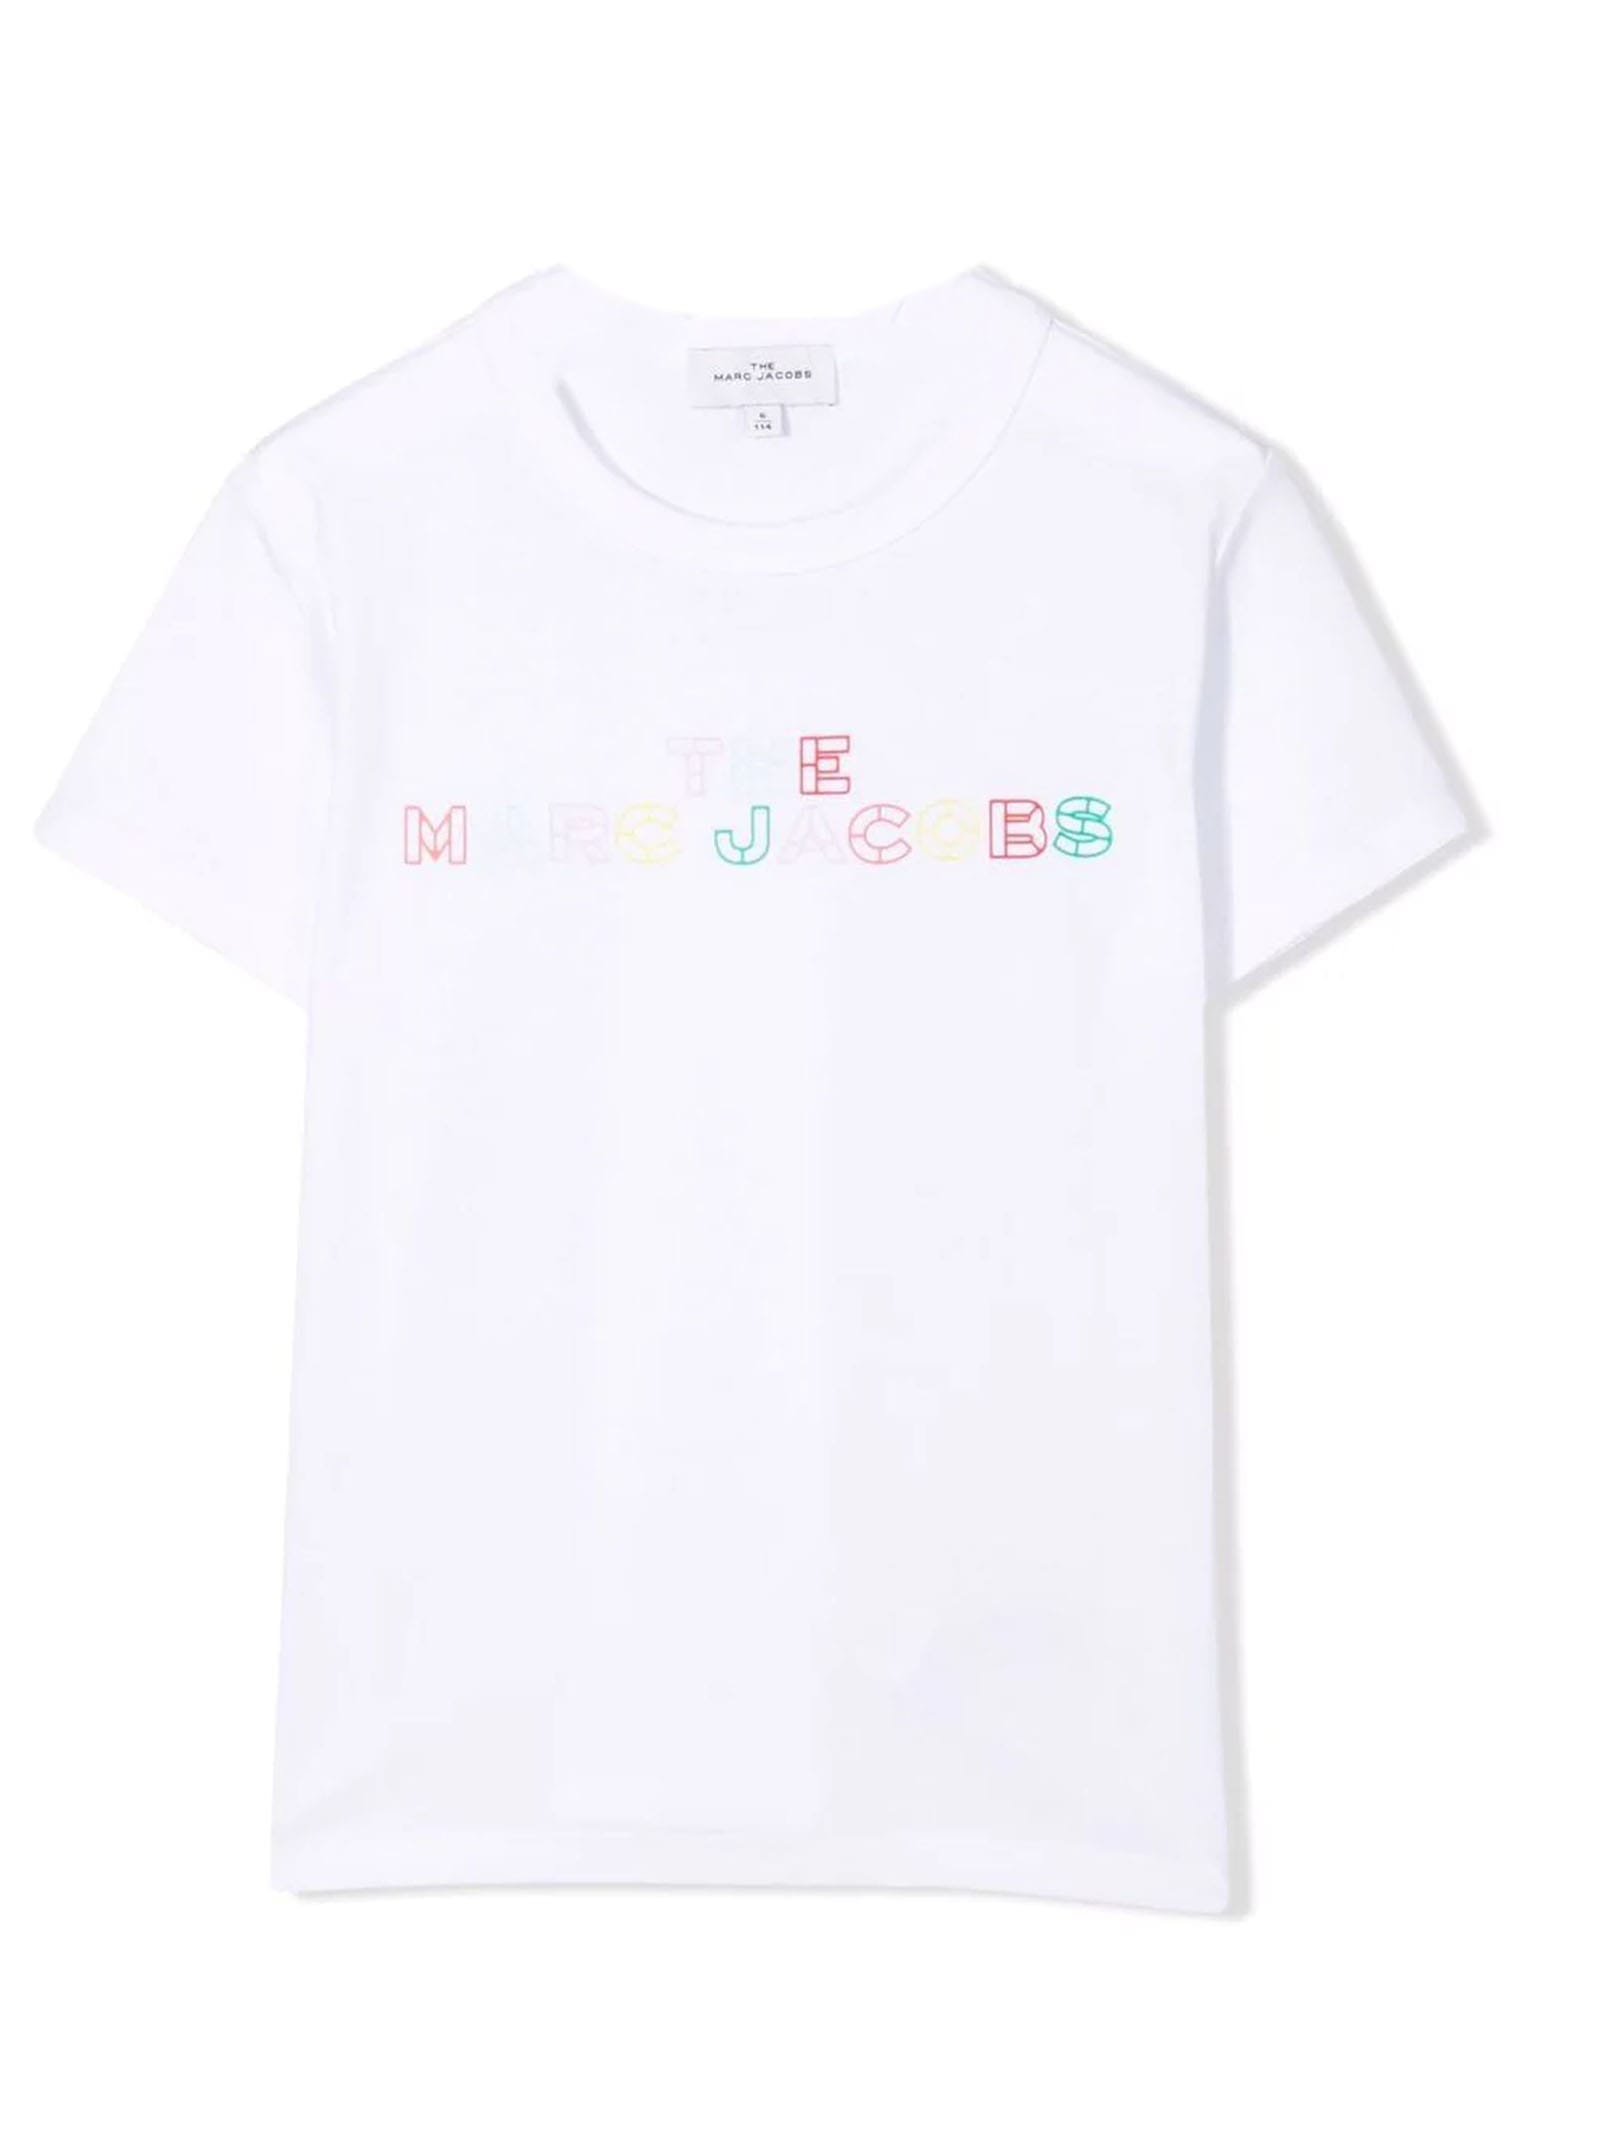 Marc Jacobs White Cotton Tshirt